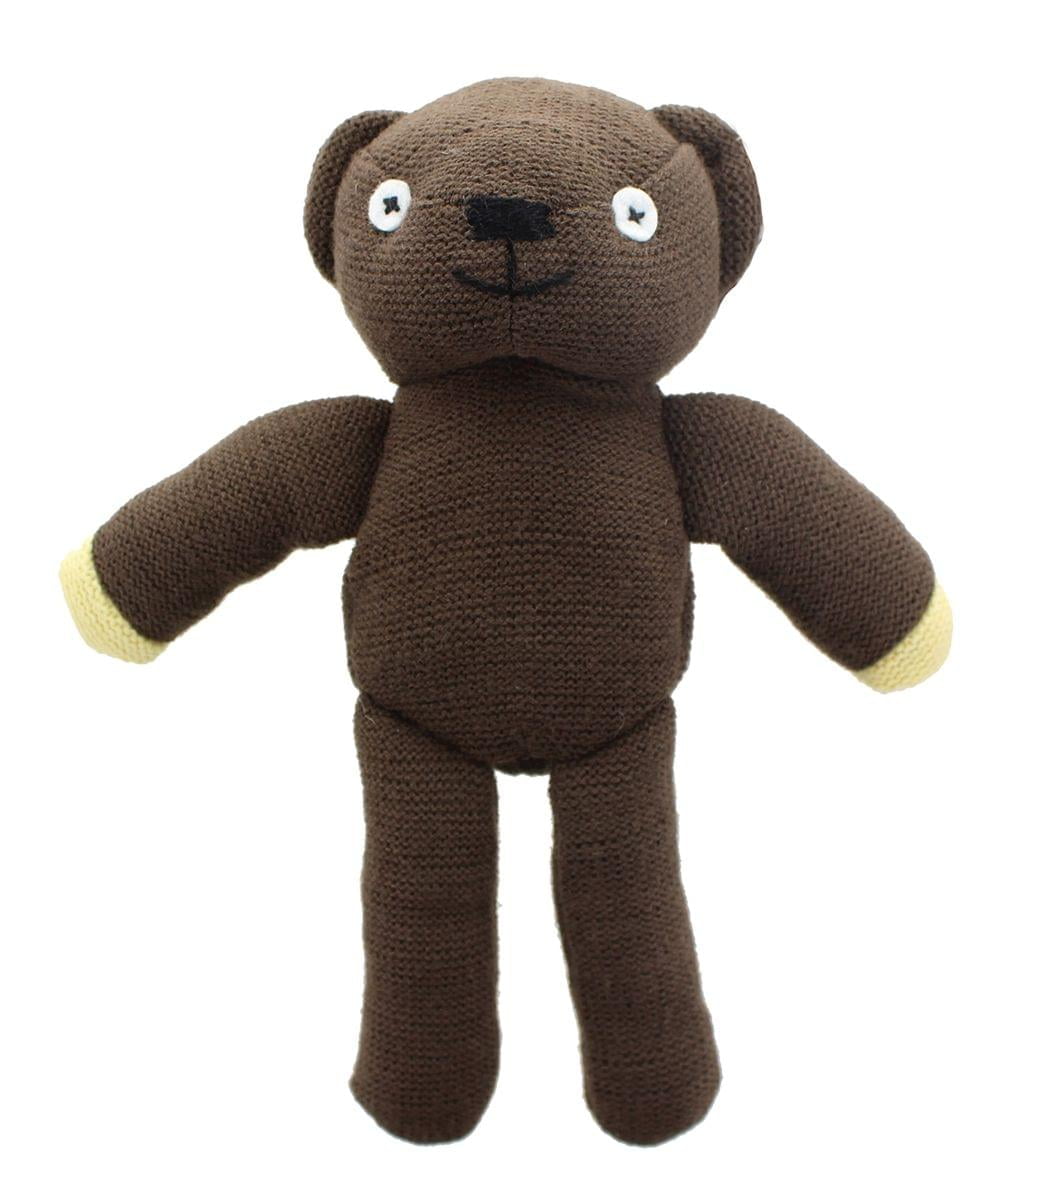 Mr. Bean 10 Plush Teddy Bear